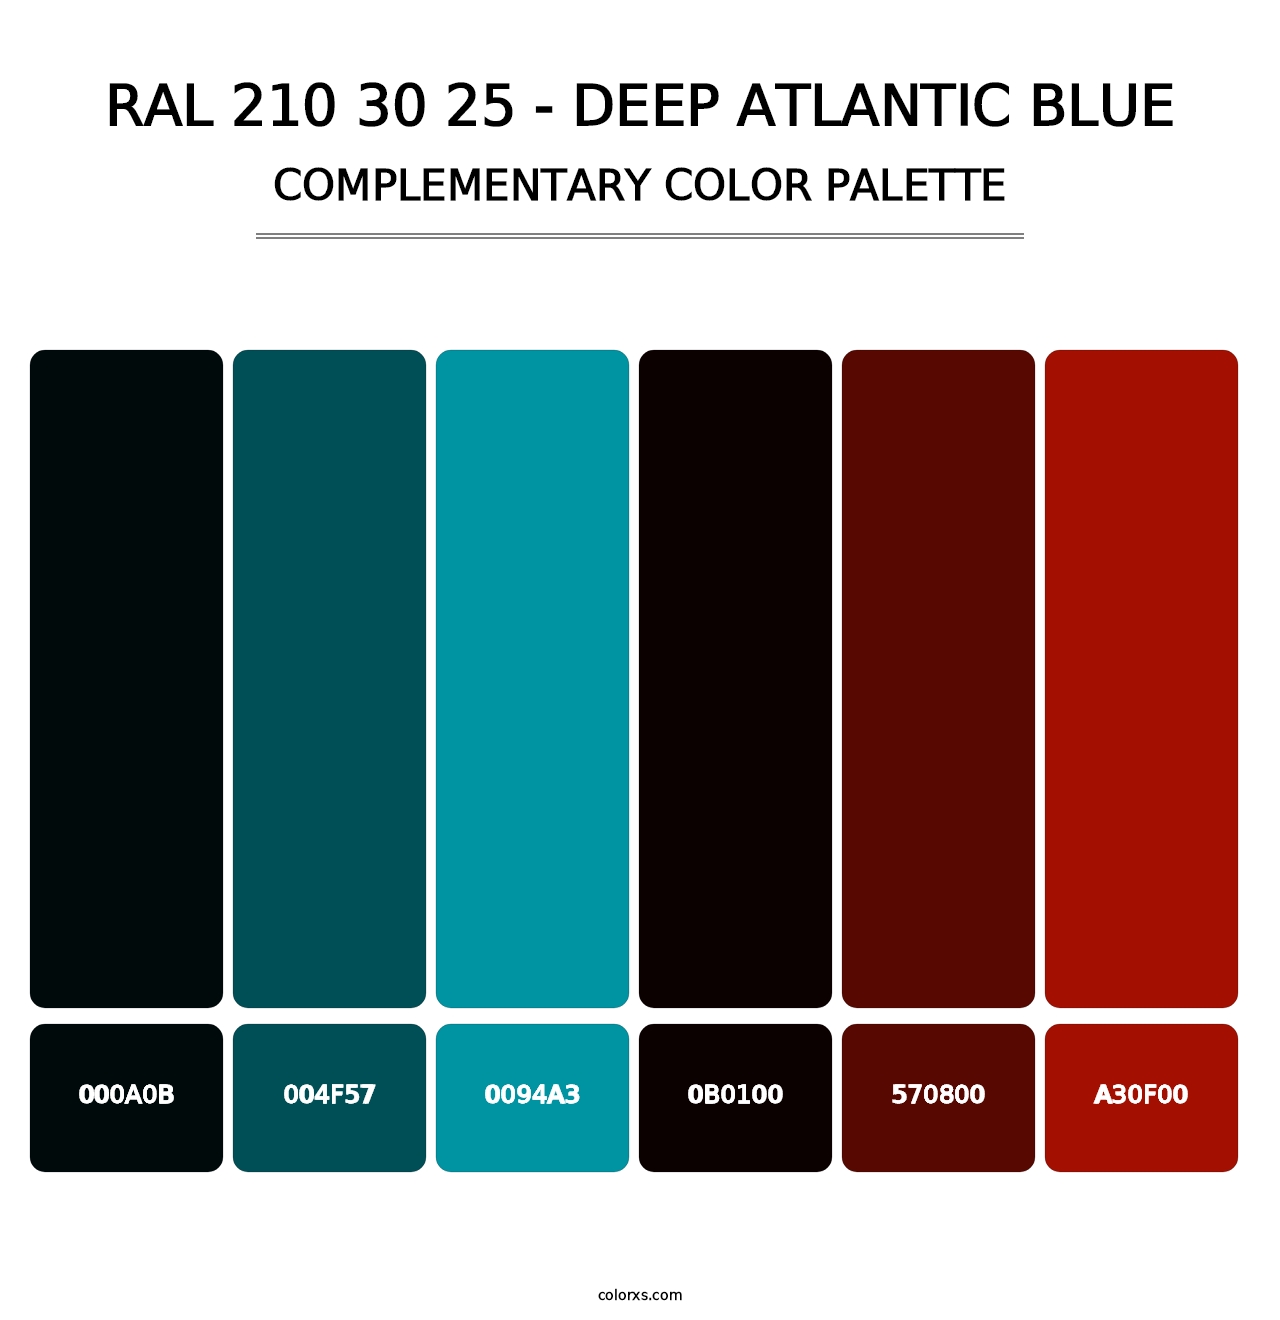 RAL 210 30 25 - Deep Atlantic Blue - Complementary Color Palette